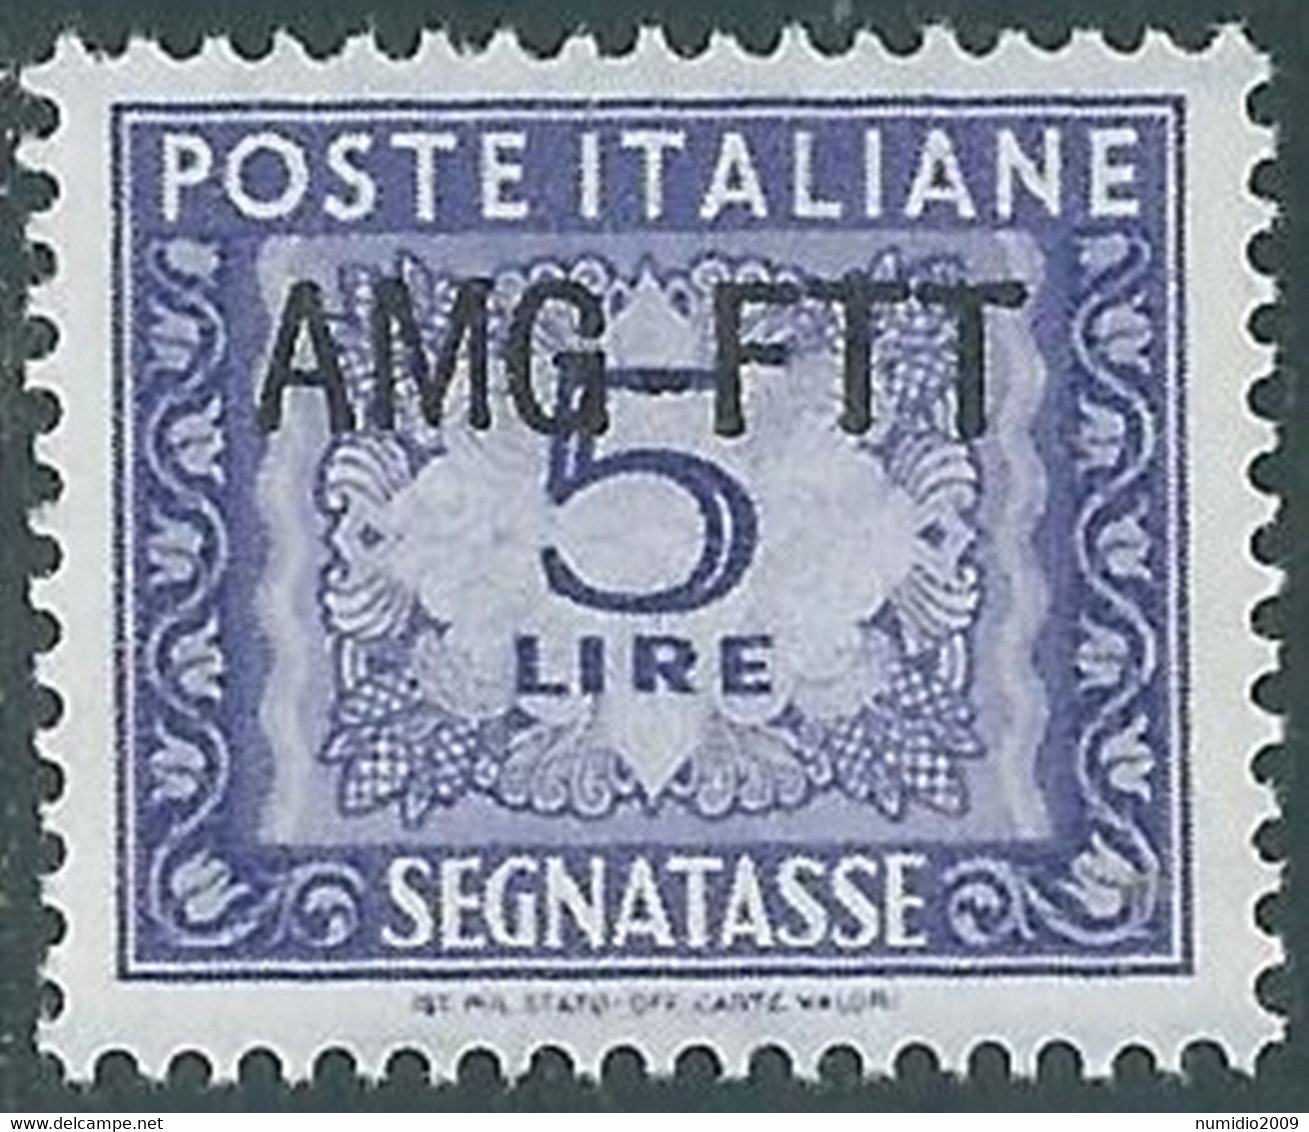 1949-54 TRIESTE A SEGNATASSE 5 LIRE MNH ** - RE11-5 - Segnatasse